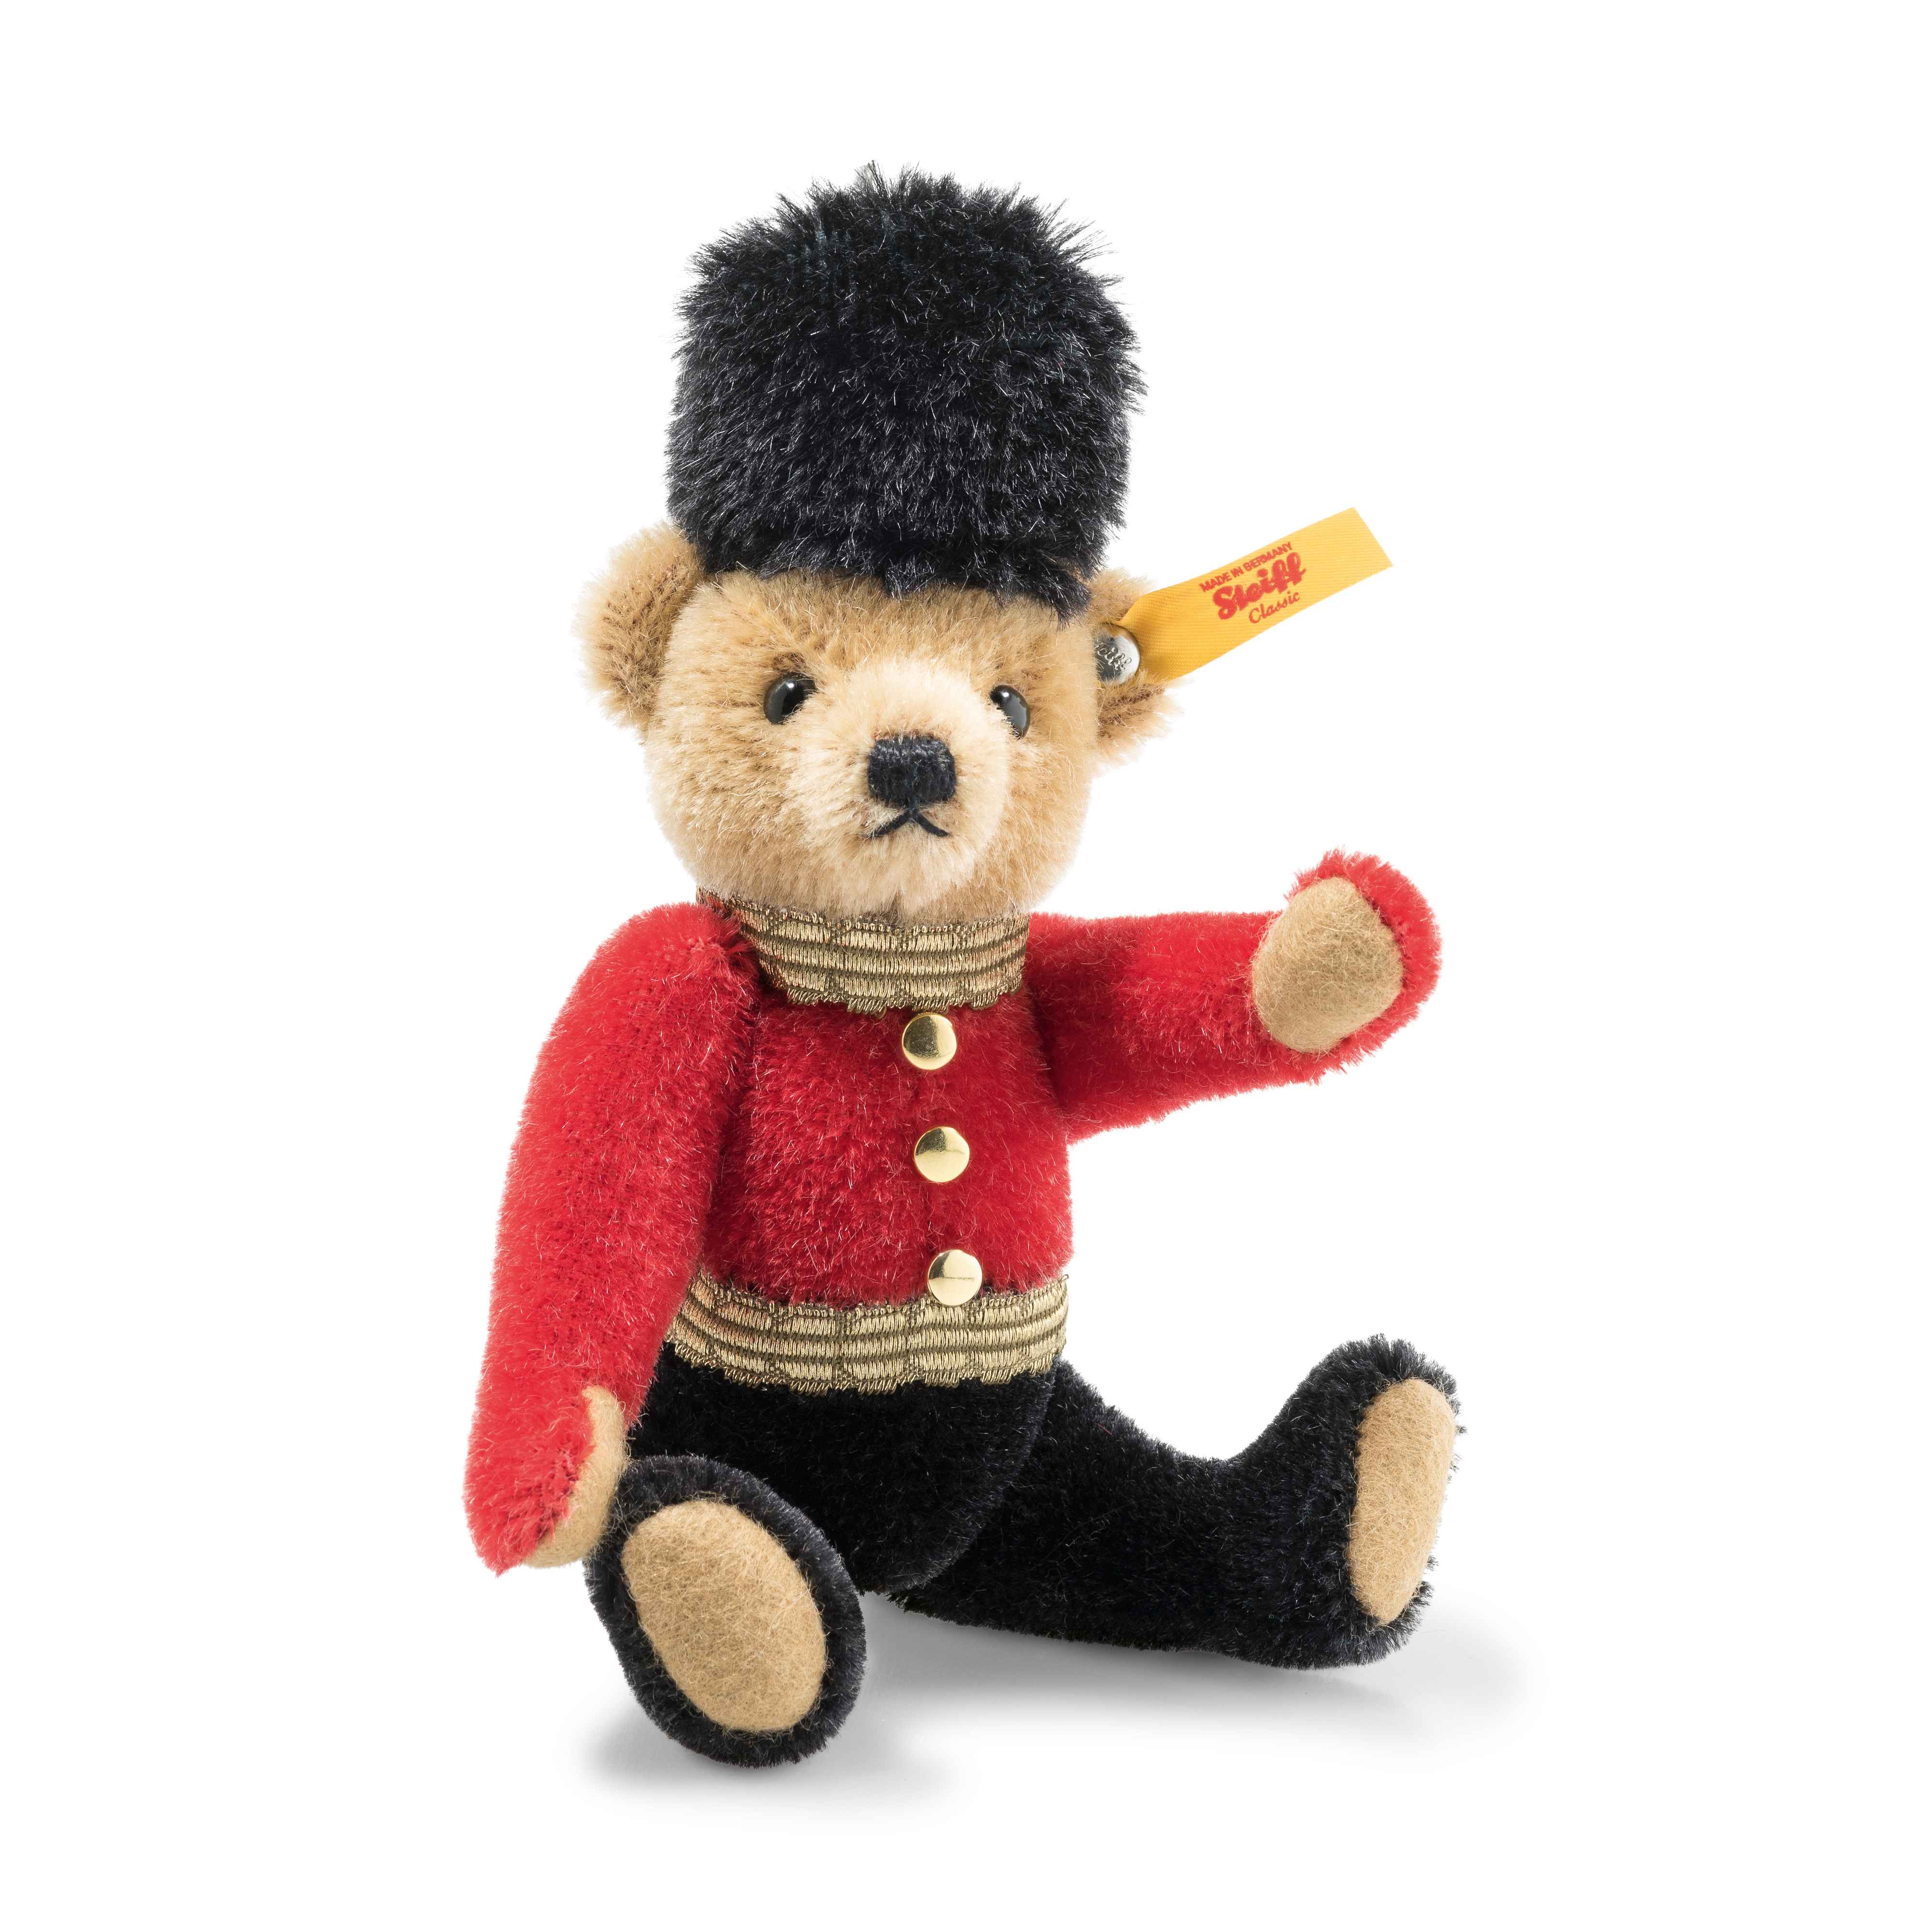 Steiff wճ}: Great Escapes London Teddy Bear in Gift Box